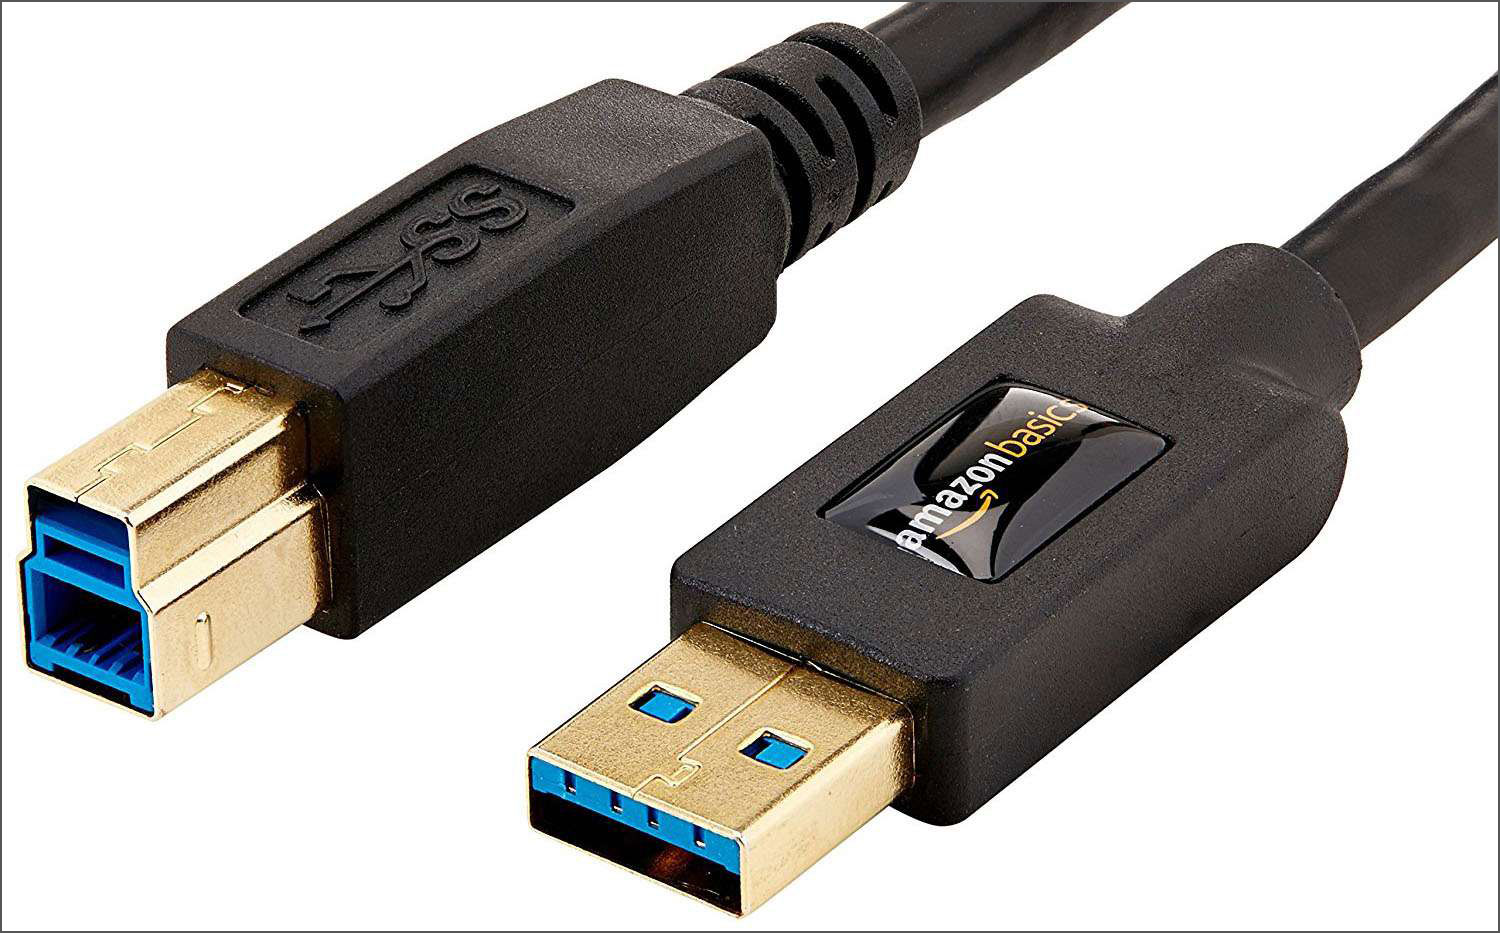 USB (Universal Serial Bus) Connectors